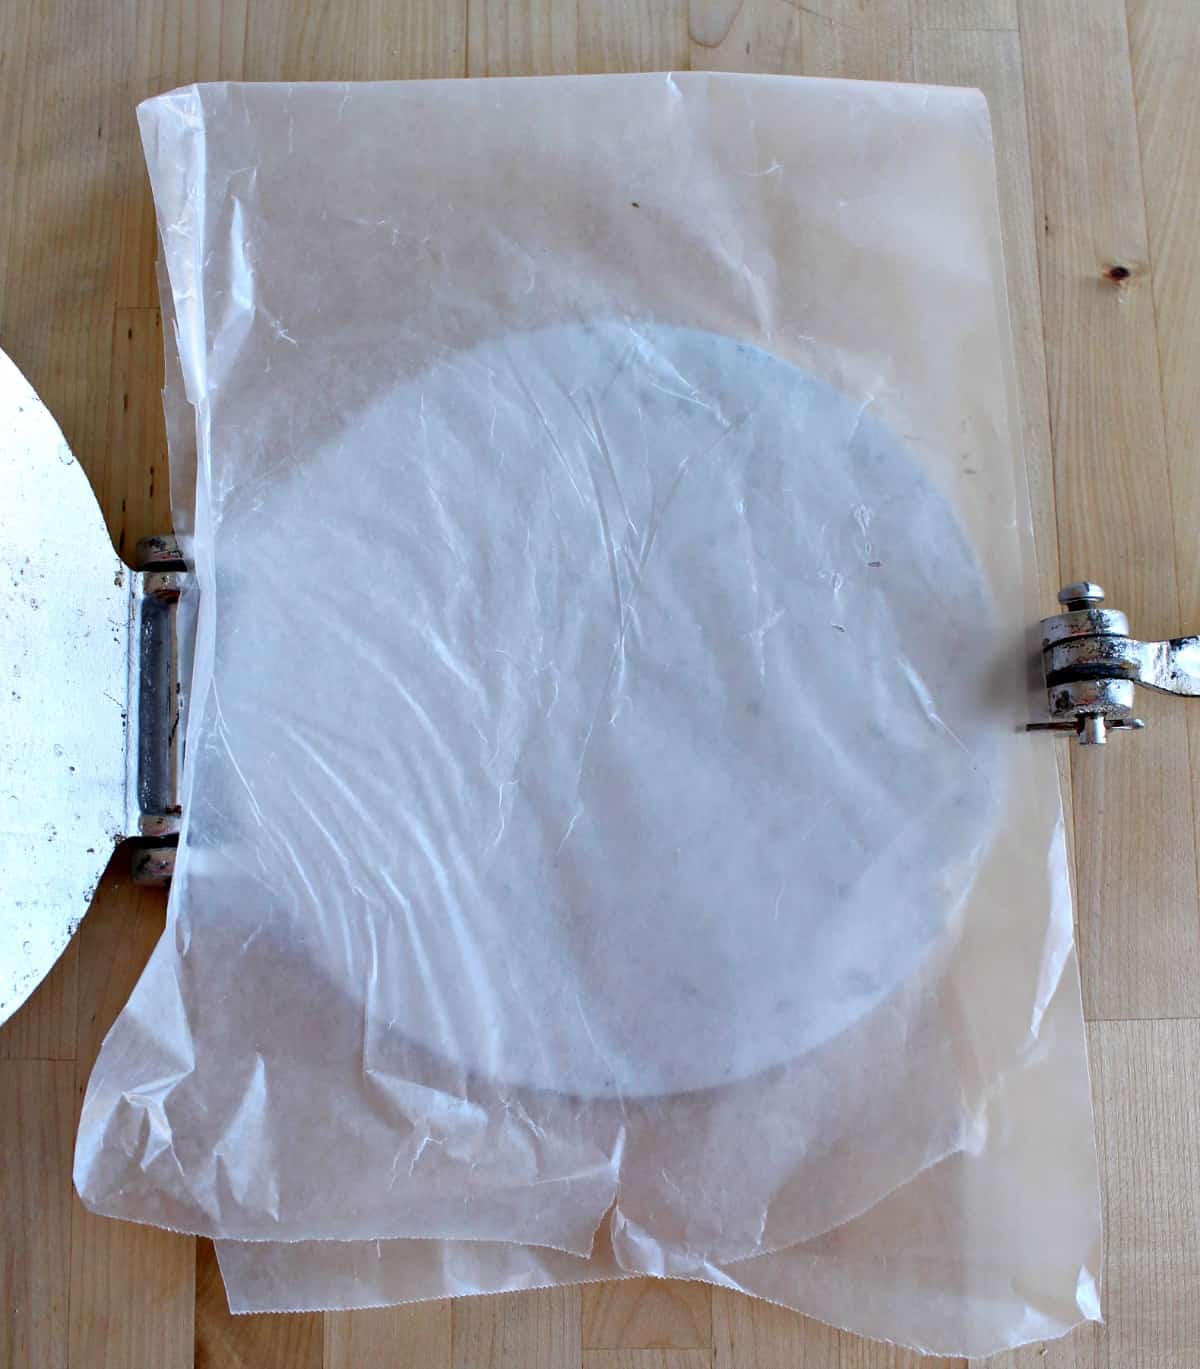 Wax paper placed inside of a tortilla press.